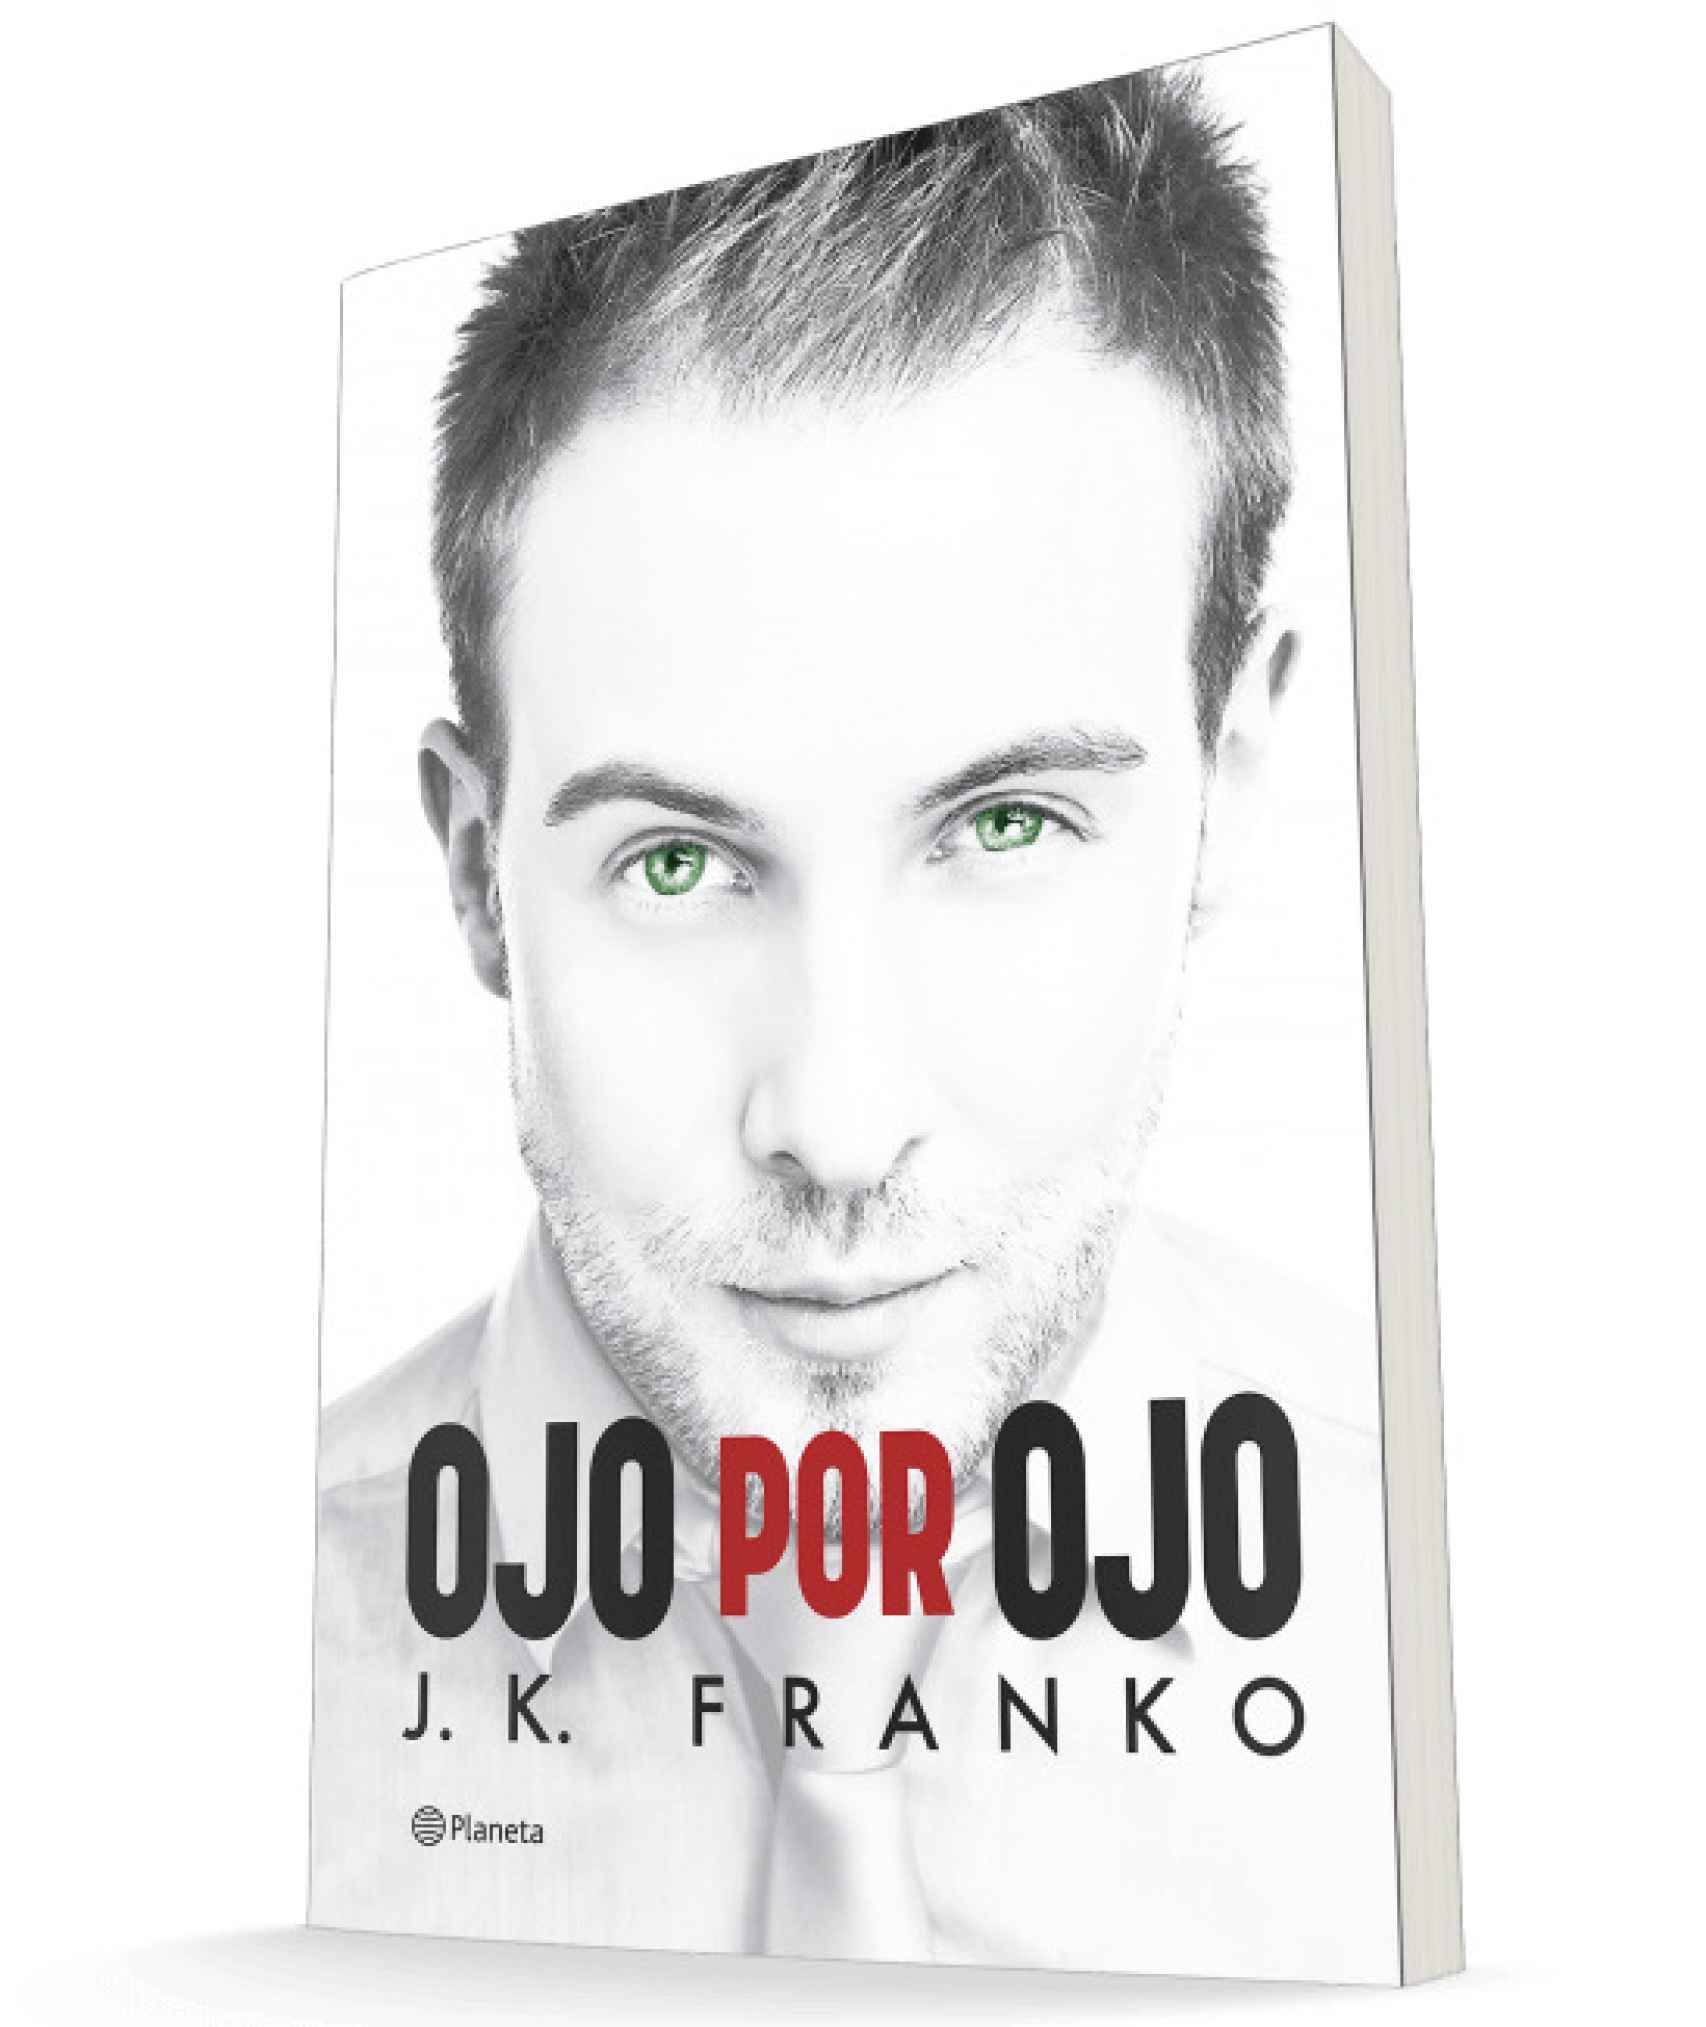 Portada de 'Ojo por ojo' de J. K. Franko.